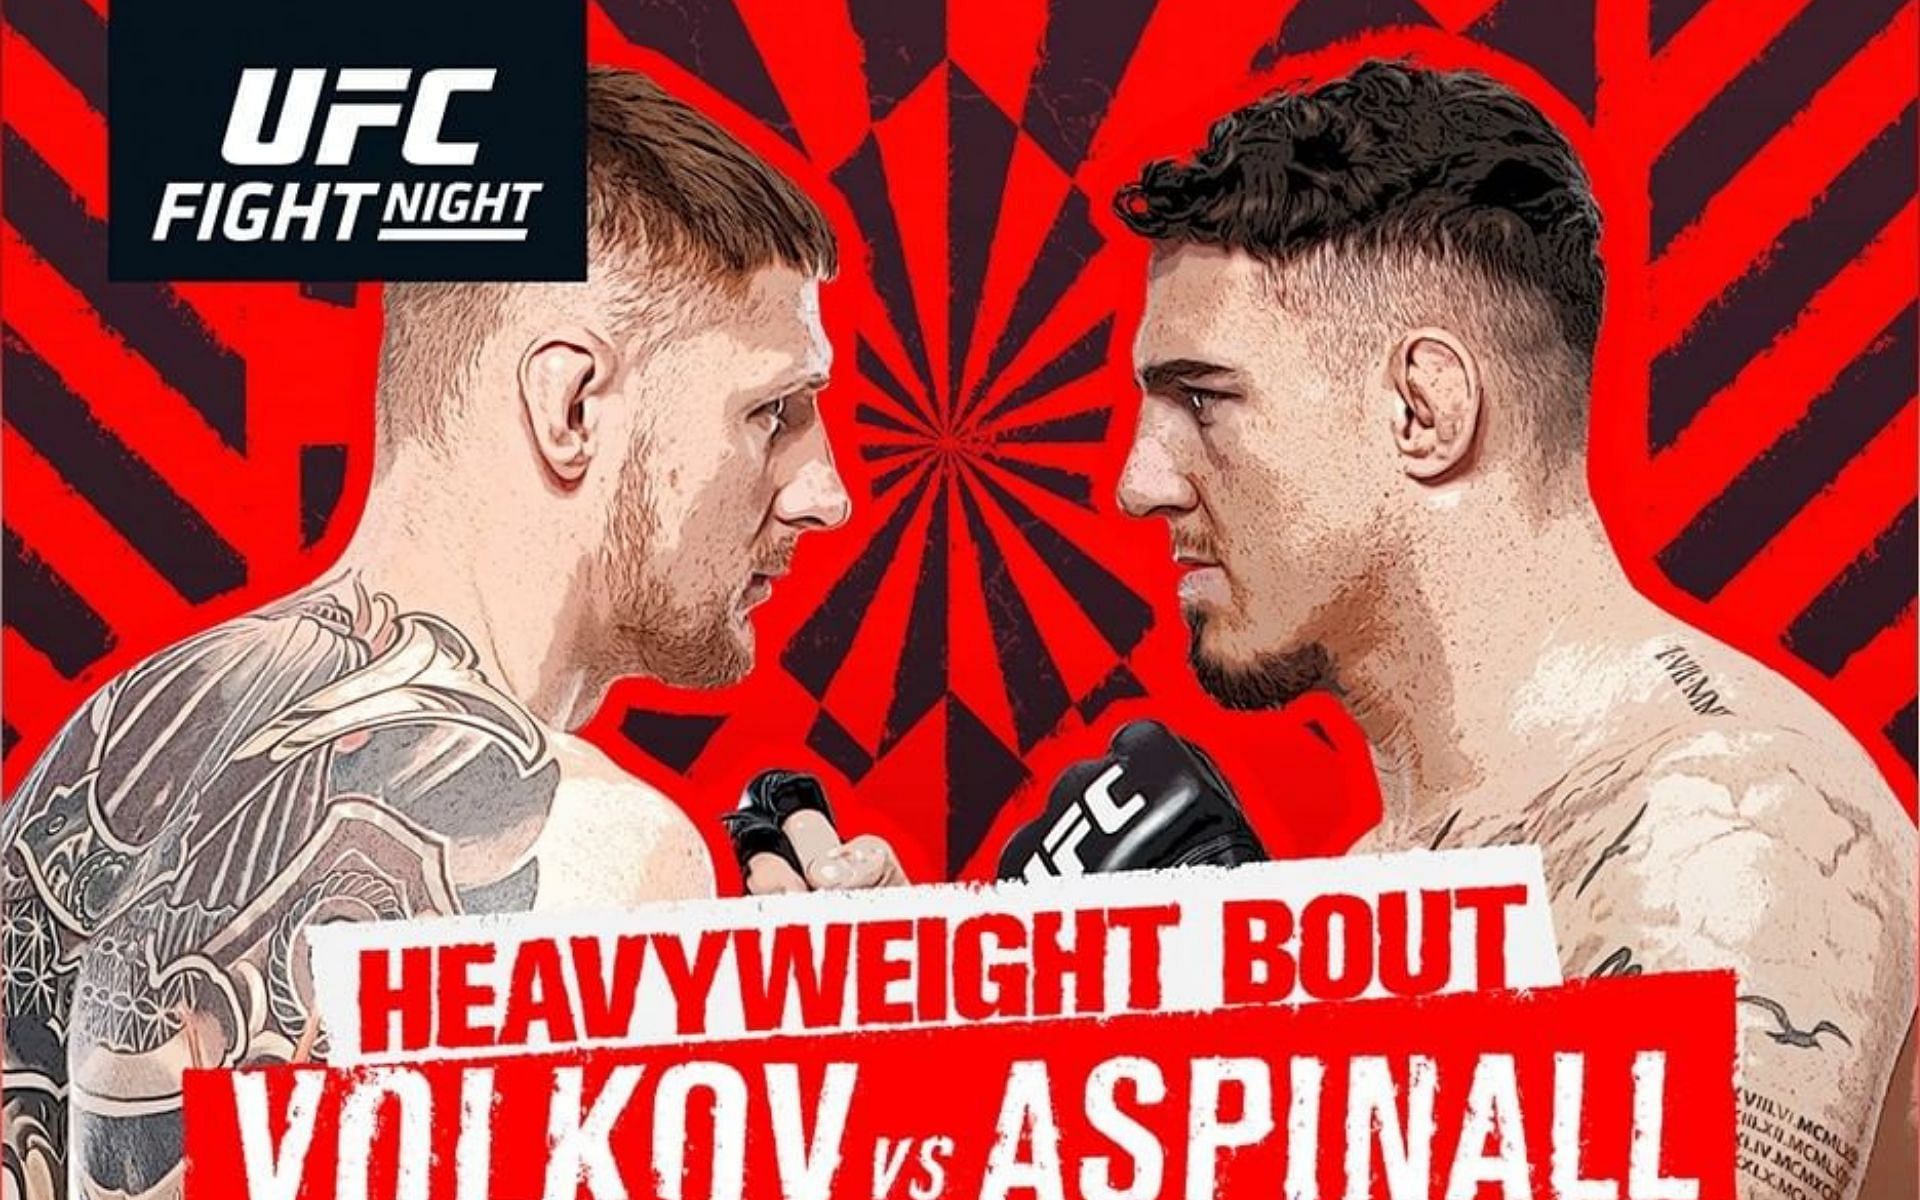 UFC Fight Night Volkov vs. Aspinall poster (Image courtesy of @ufc ig)